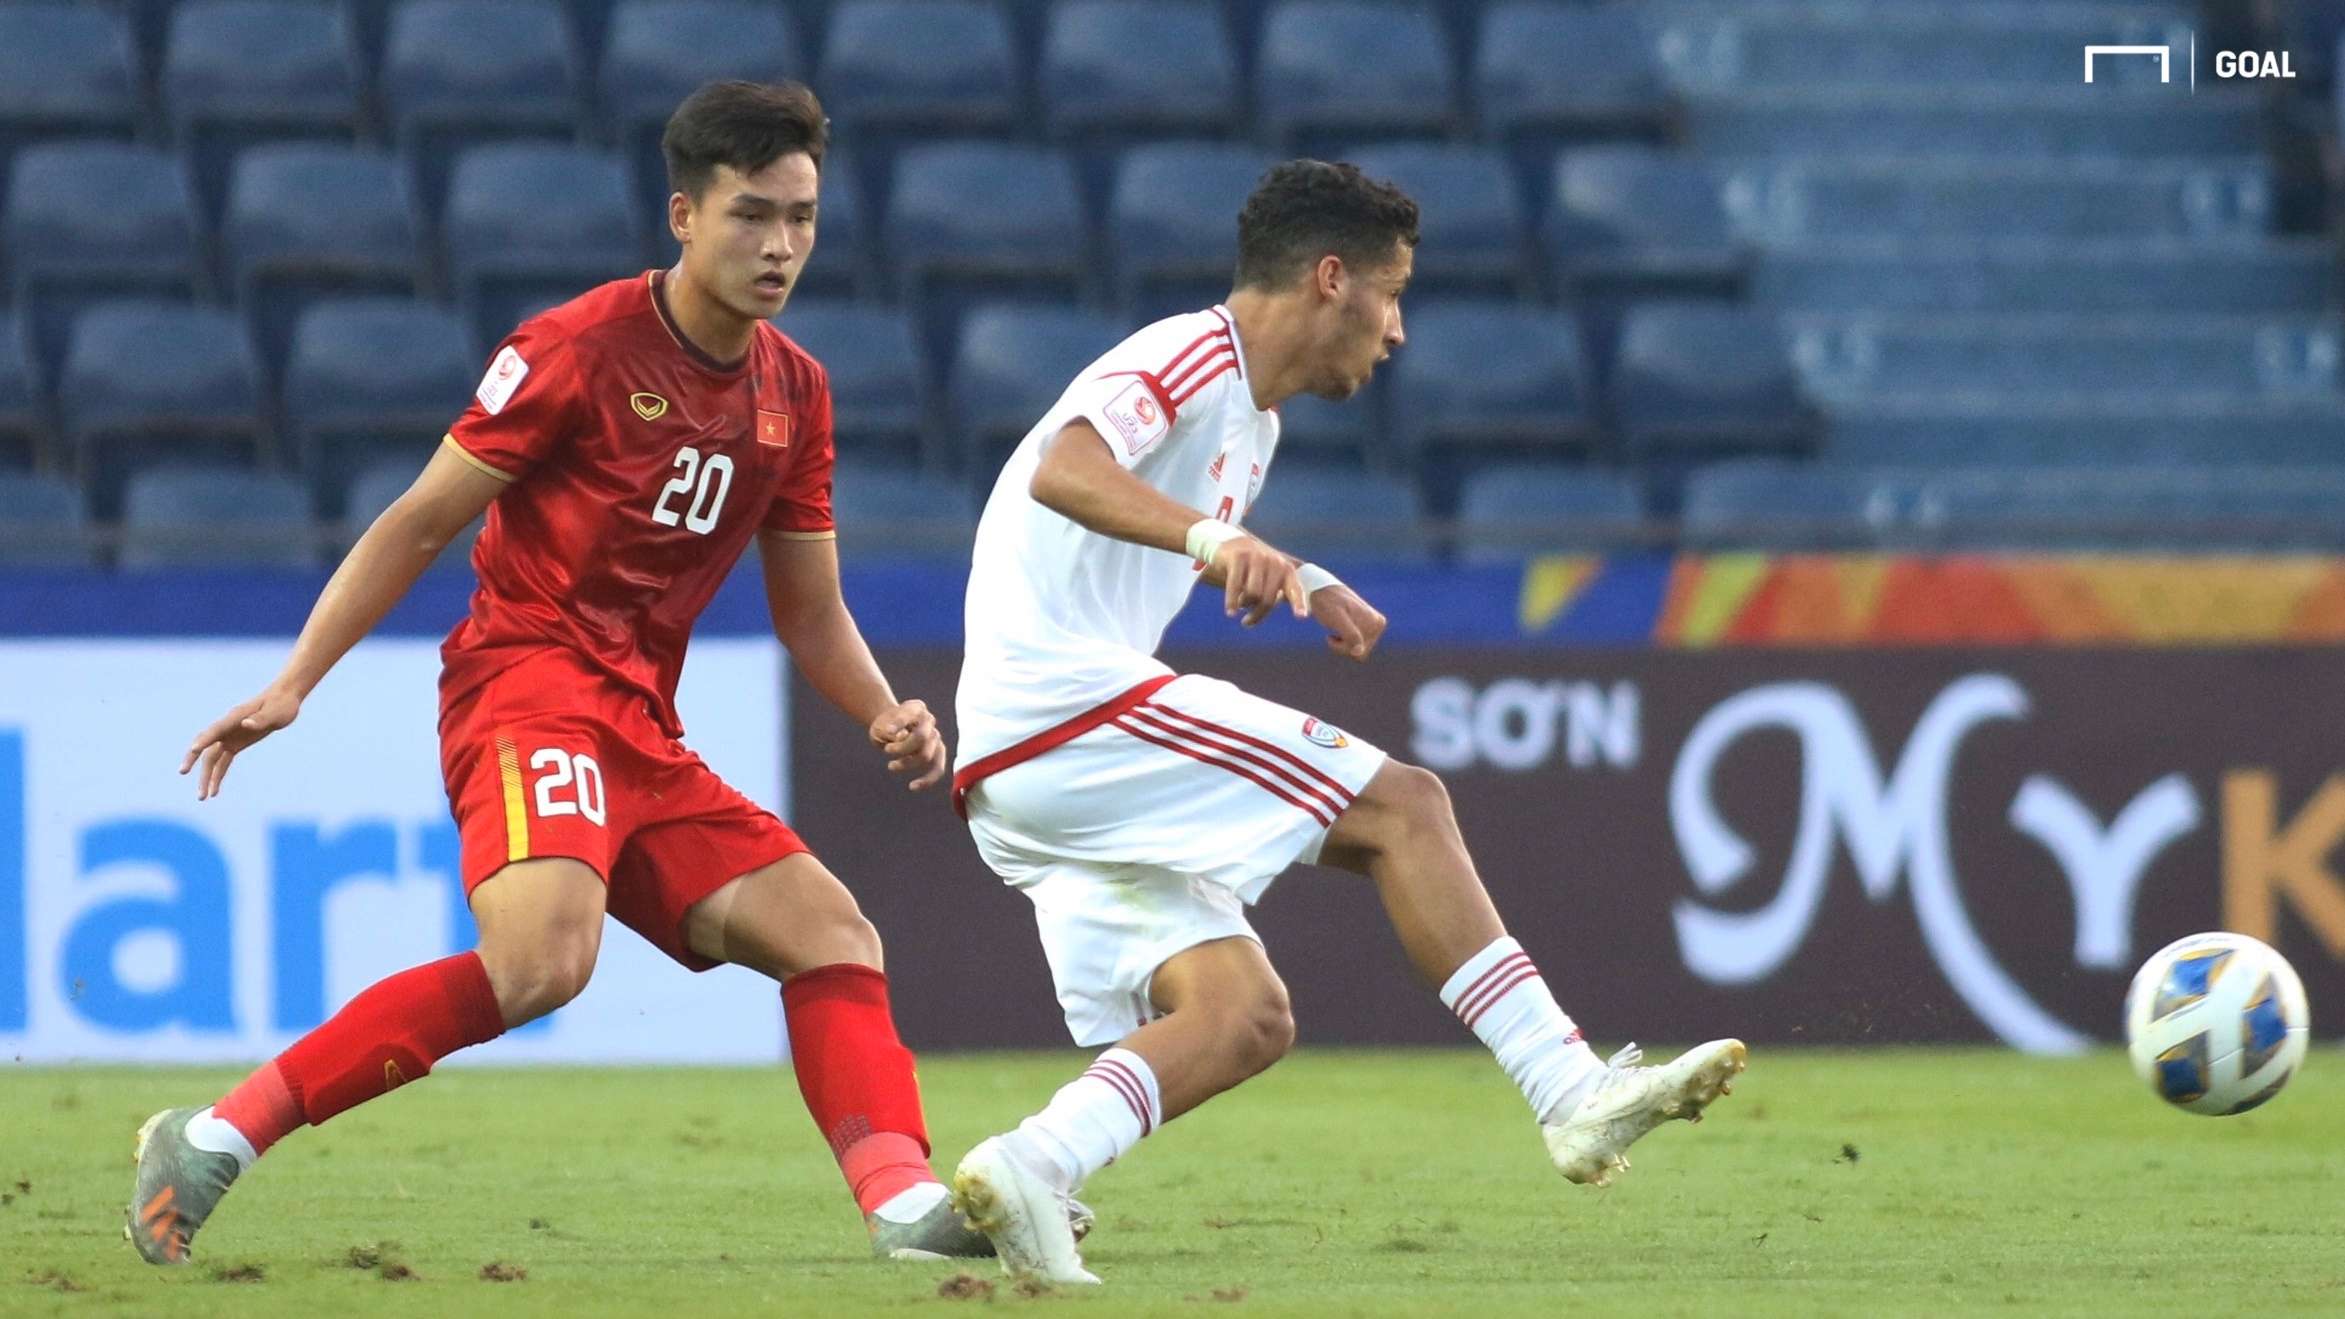 Bui Hoang Viet Anh | U23 Vietnam vs U23 UAE | AFC U23 Championship 2020 | Group Stage